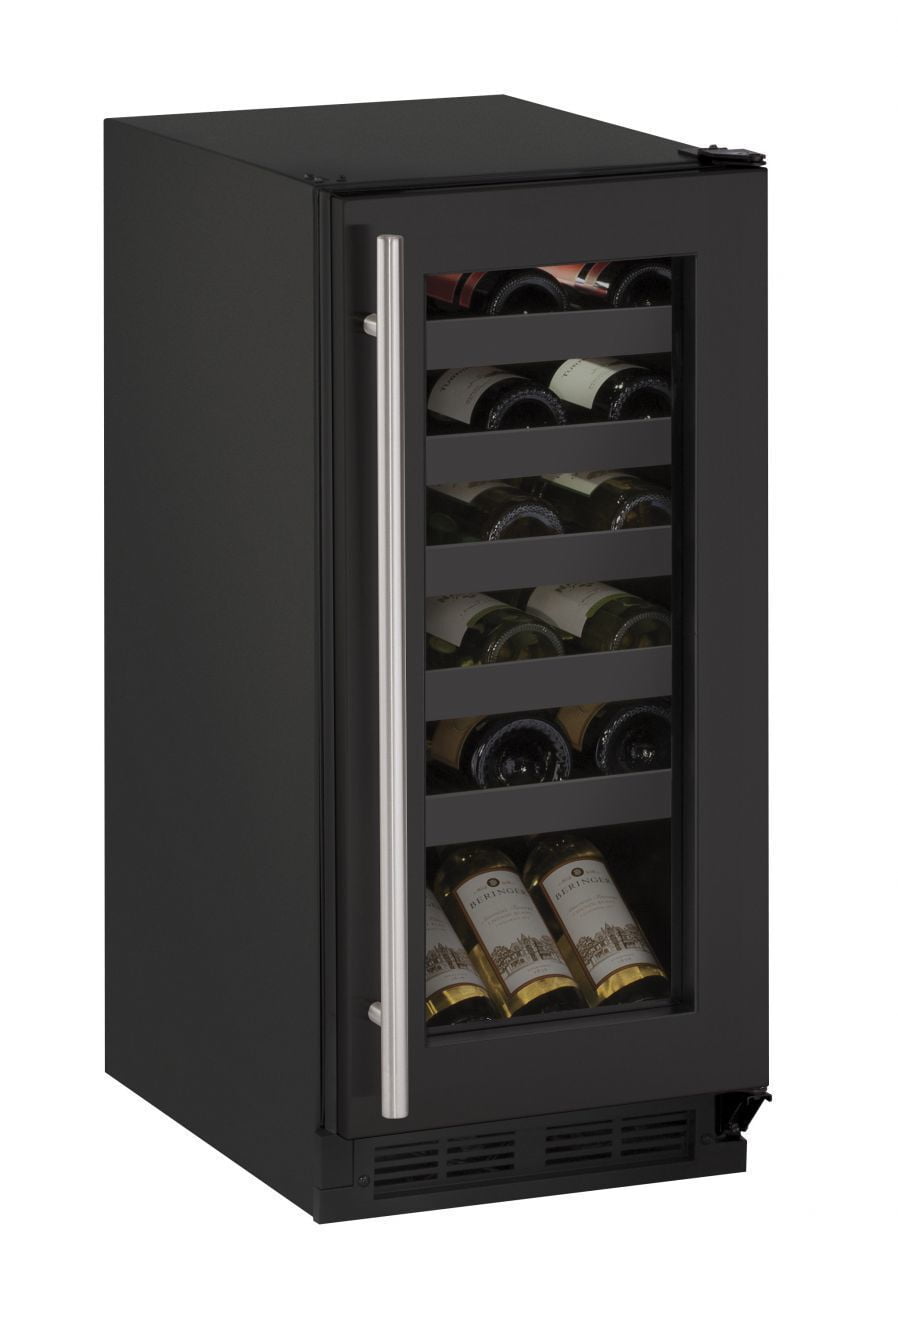 U-Line U1215WCB00B 1215Wc 15" Wine Refrigerator With Black Frame Finish (115 V/60 Hz Volts /60 Hz Hz)